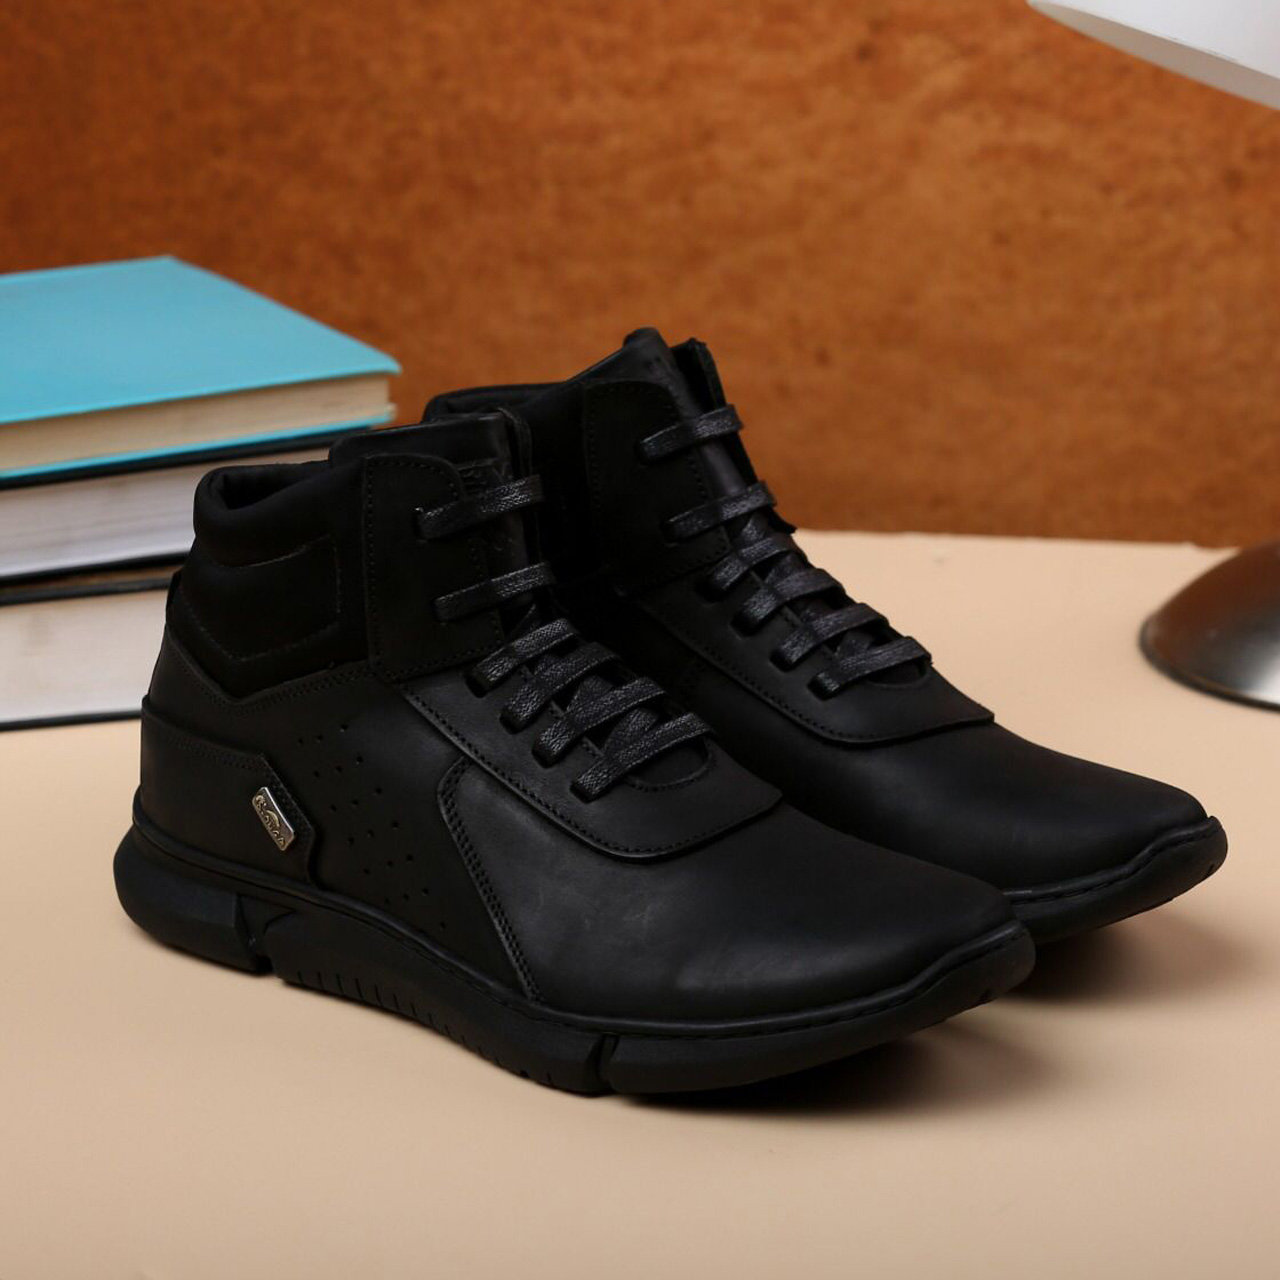 Donga - Boots 100% Genuine Leather Shoe (Genuine Leather Shemezette)